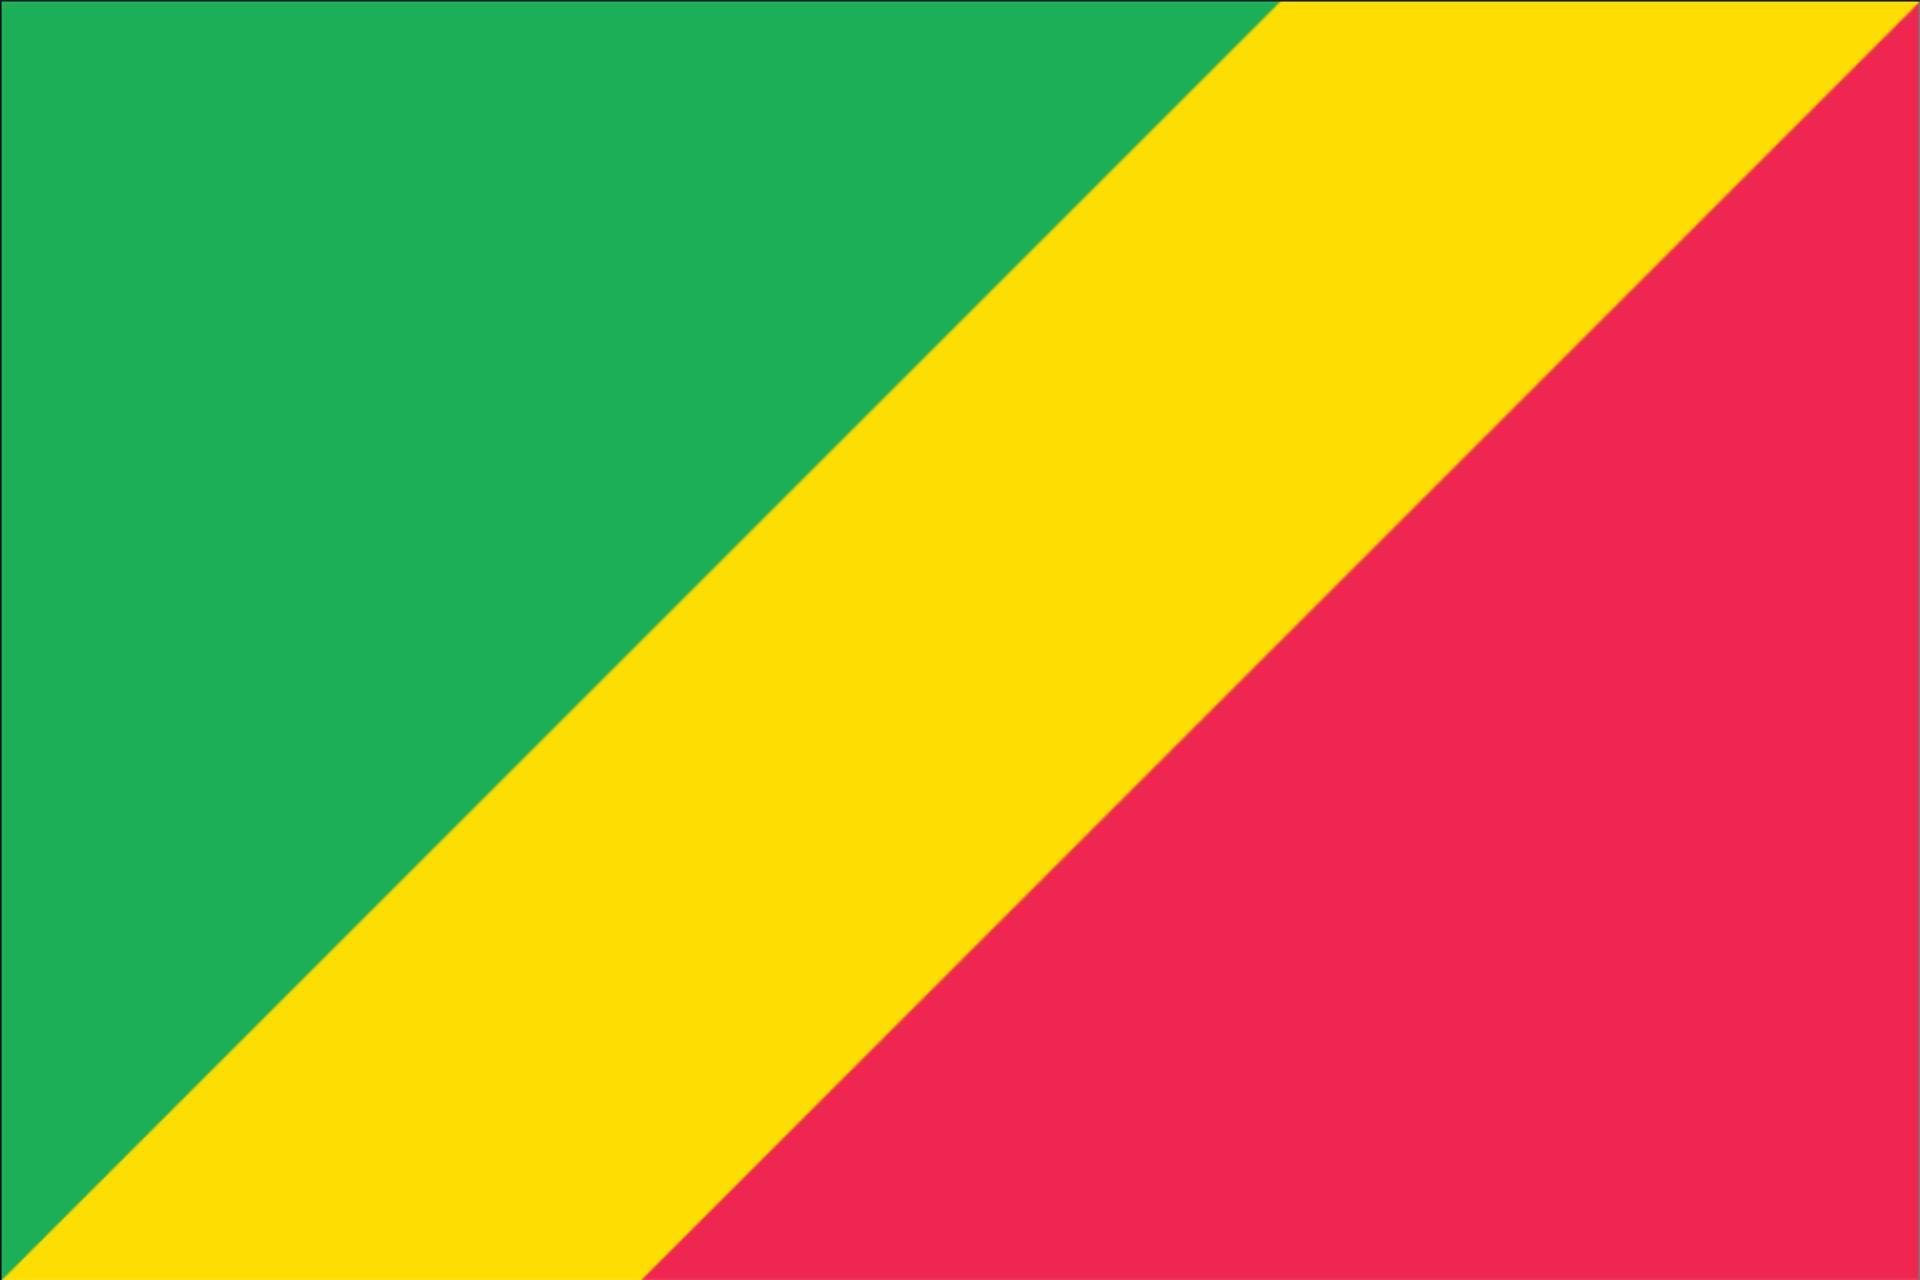 Kongo flaggenmeer g/m² Flagge Querformat Flagge 110 (Republik)